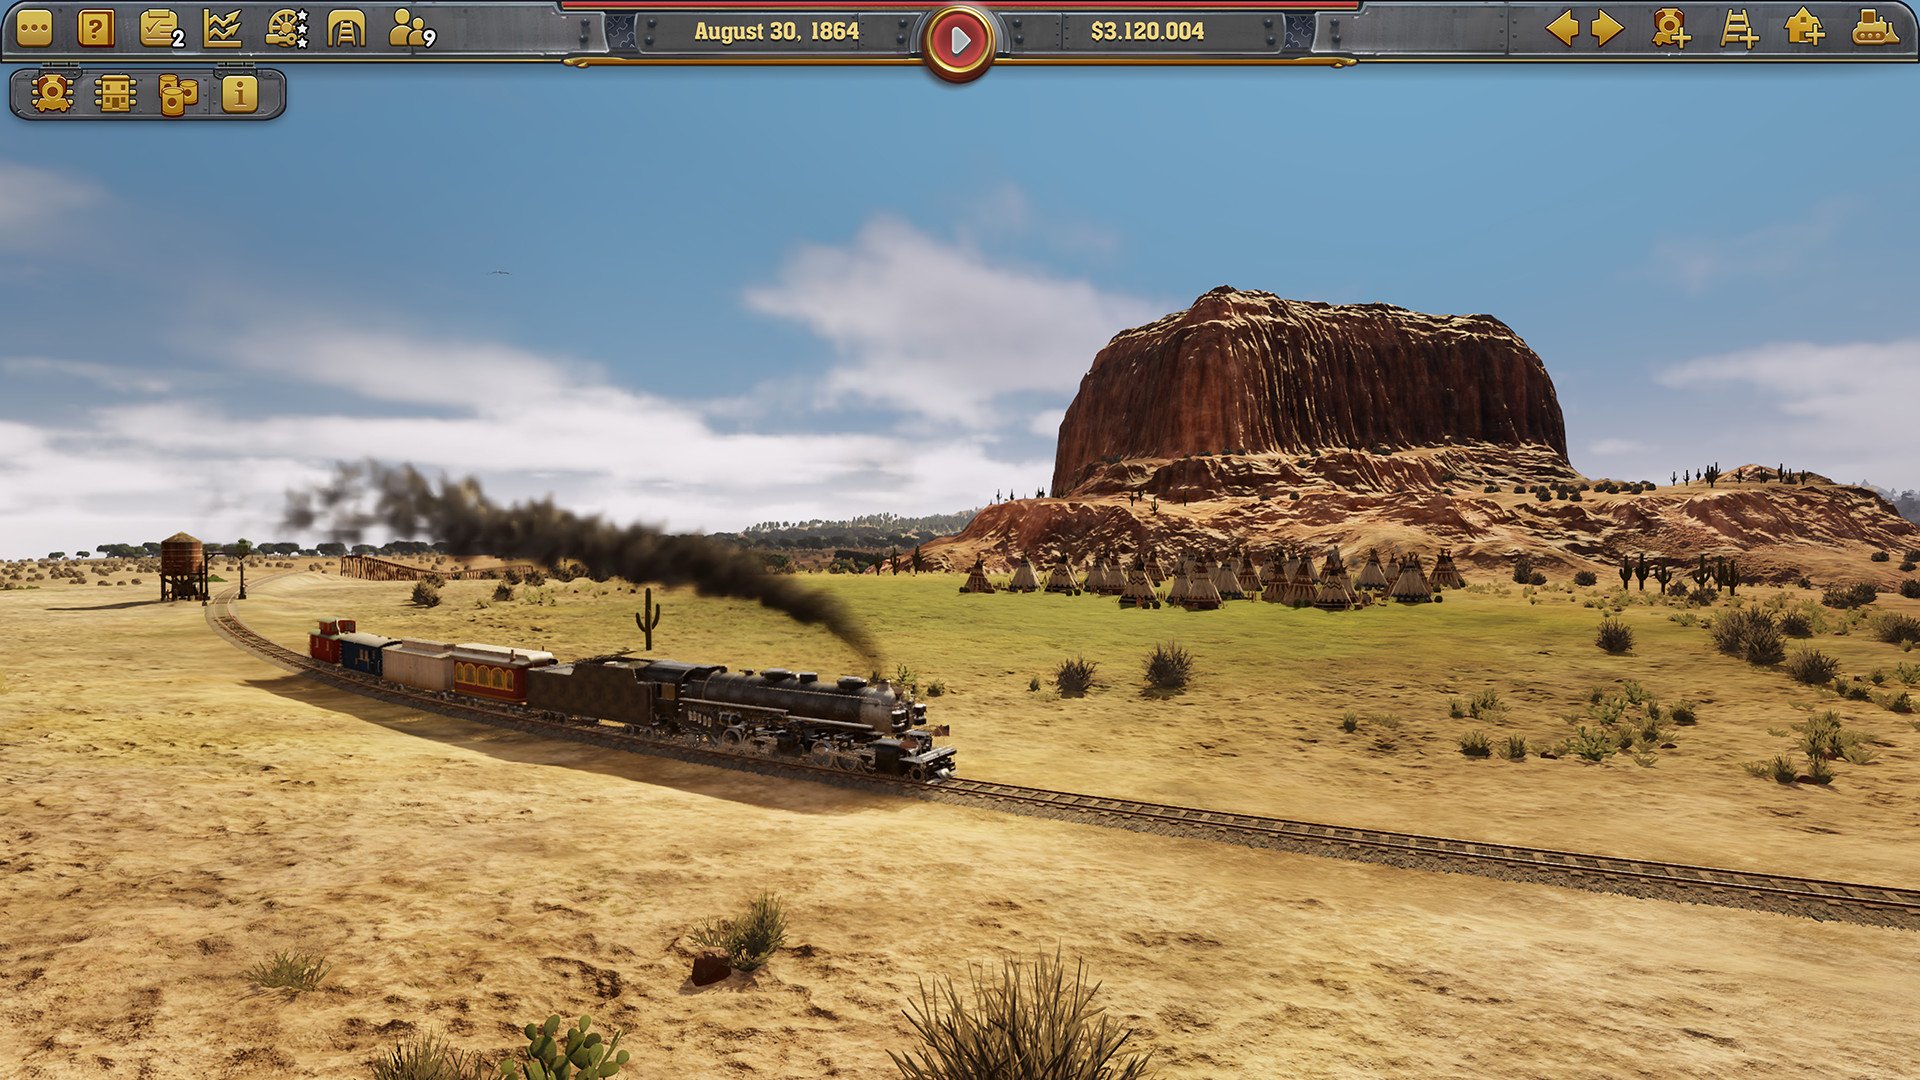 Скриншот 2 к игре Railway Empire Complete Collection [GOG] (2018) PC | Лицензия